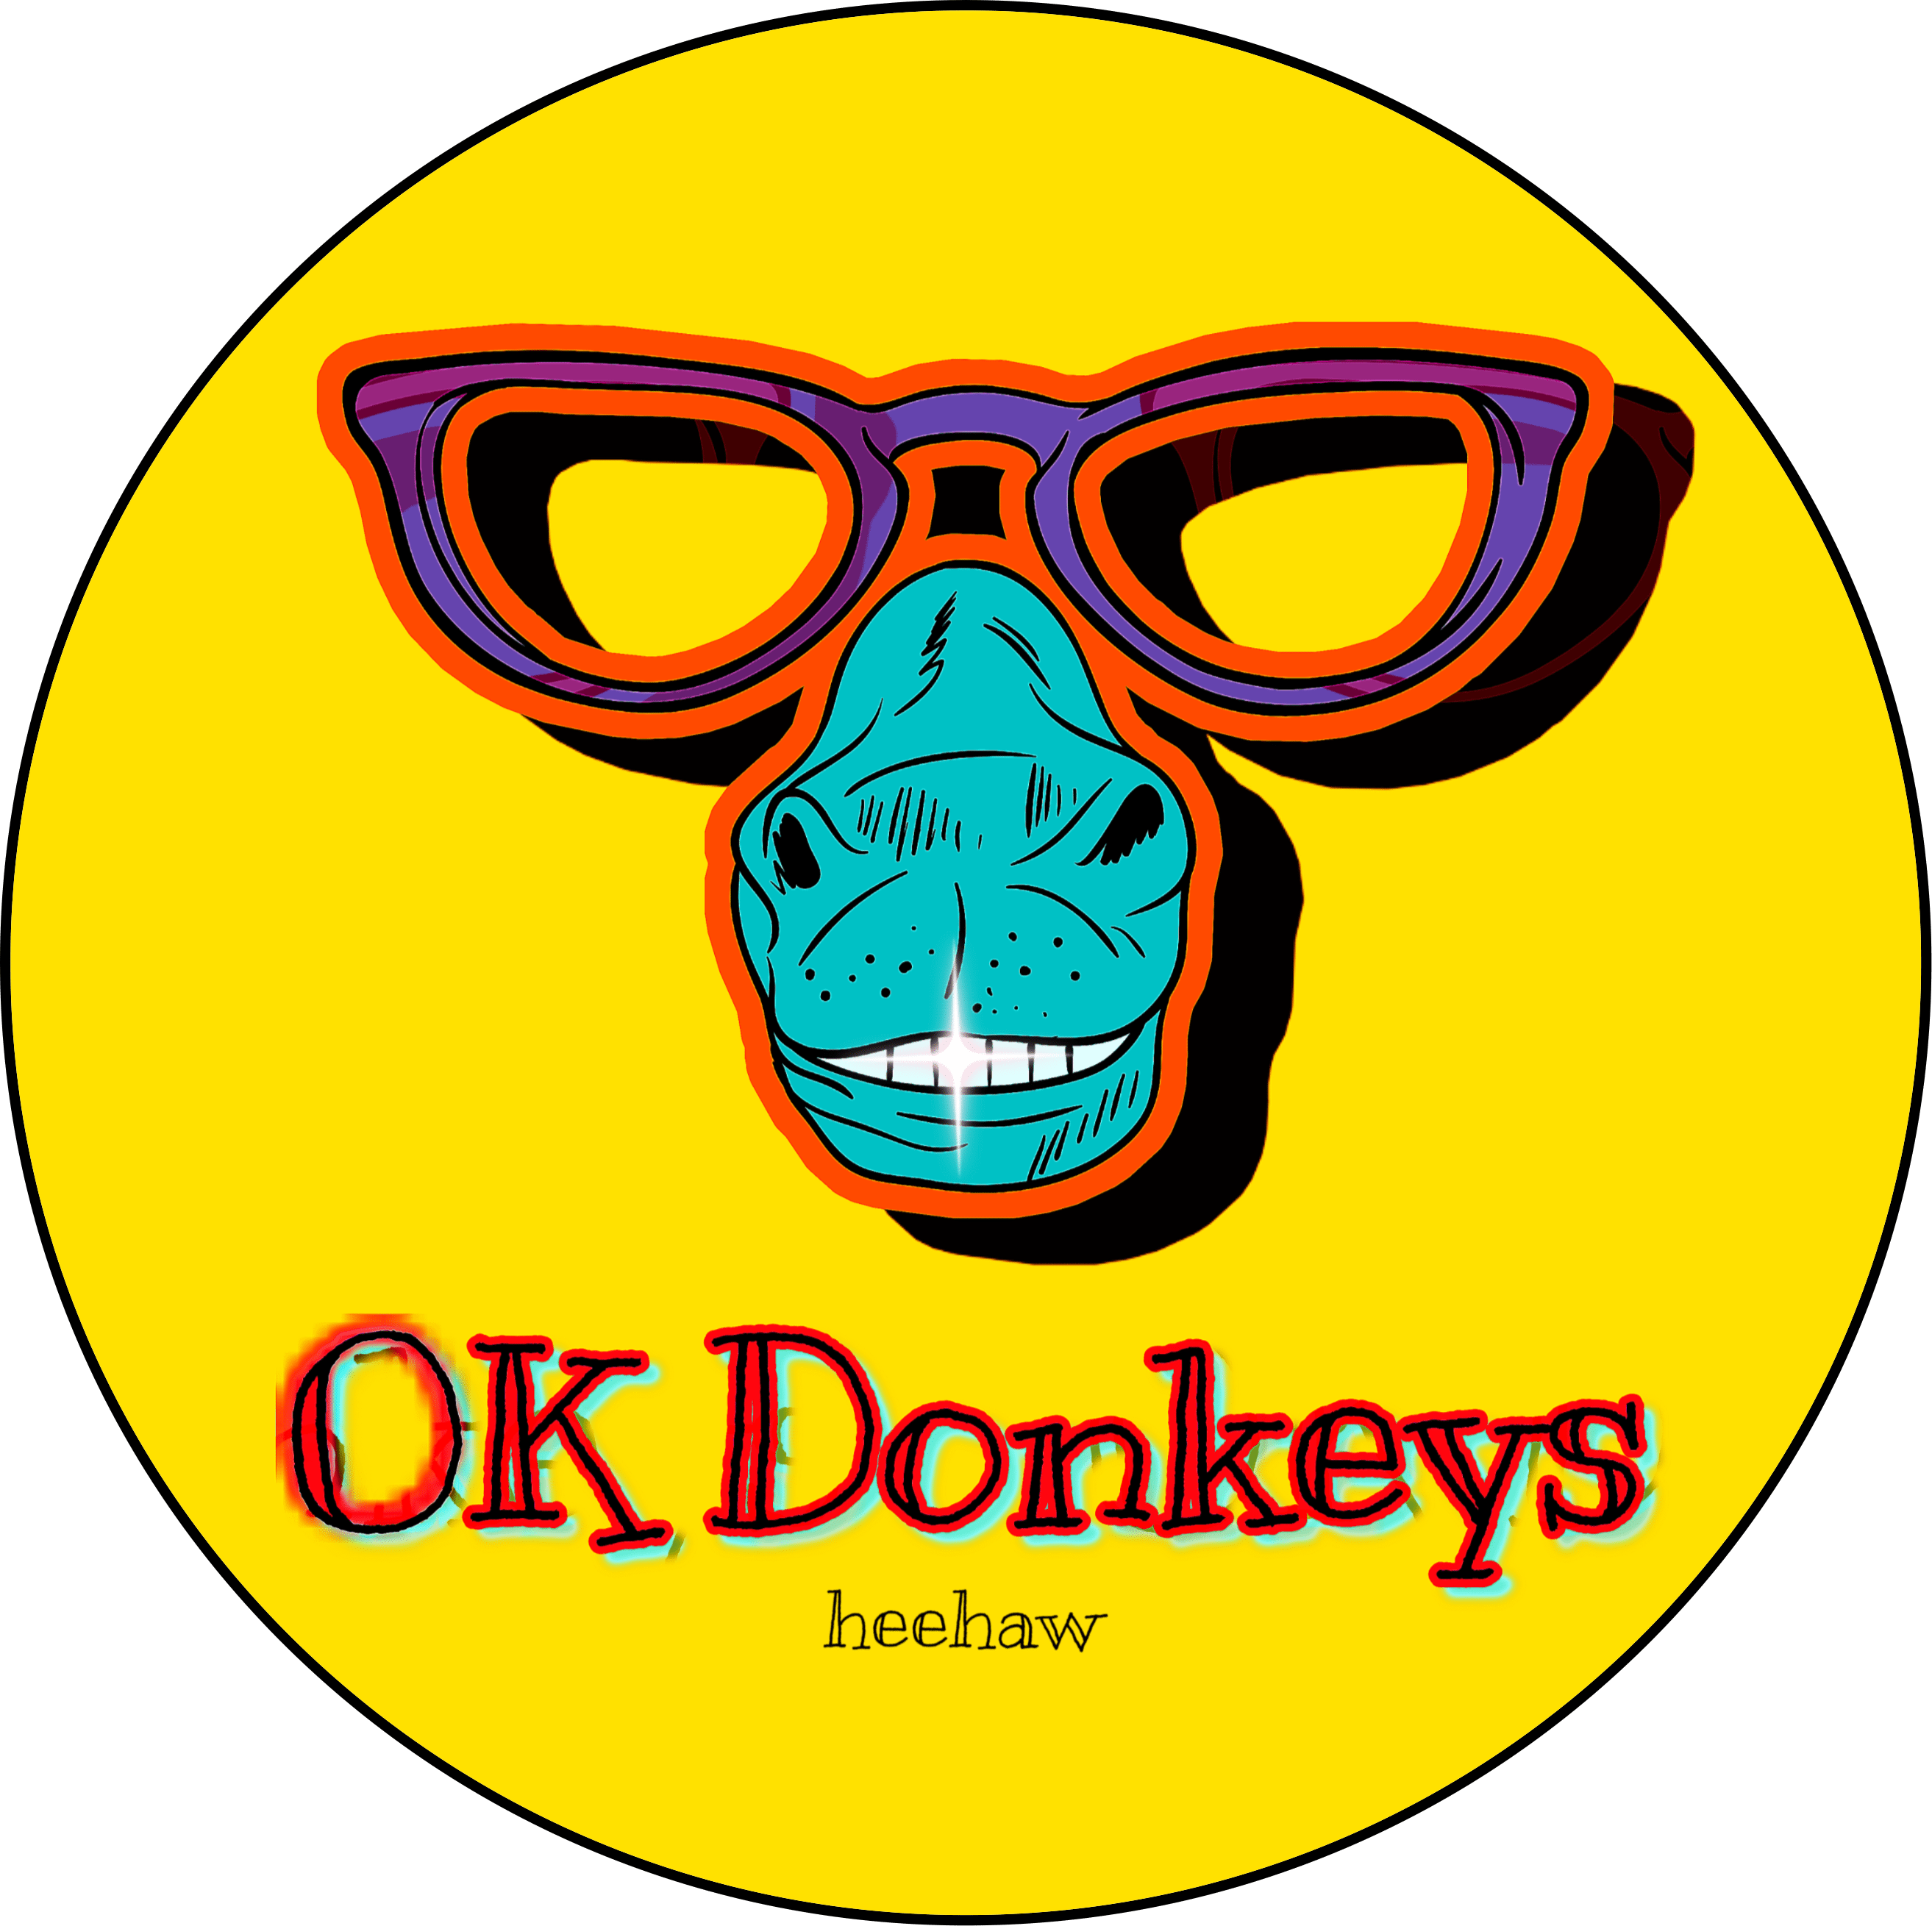 Wednesday (2022) - Wednesday Addams Metallic Pop! Vinyl Figure - OK Donkeys